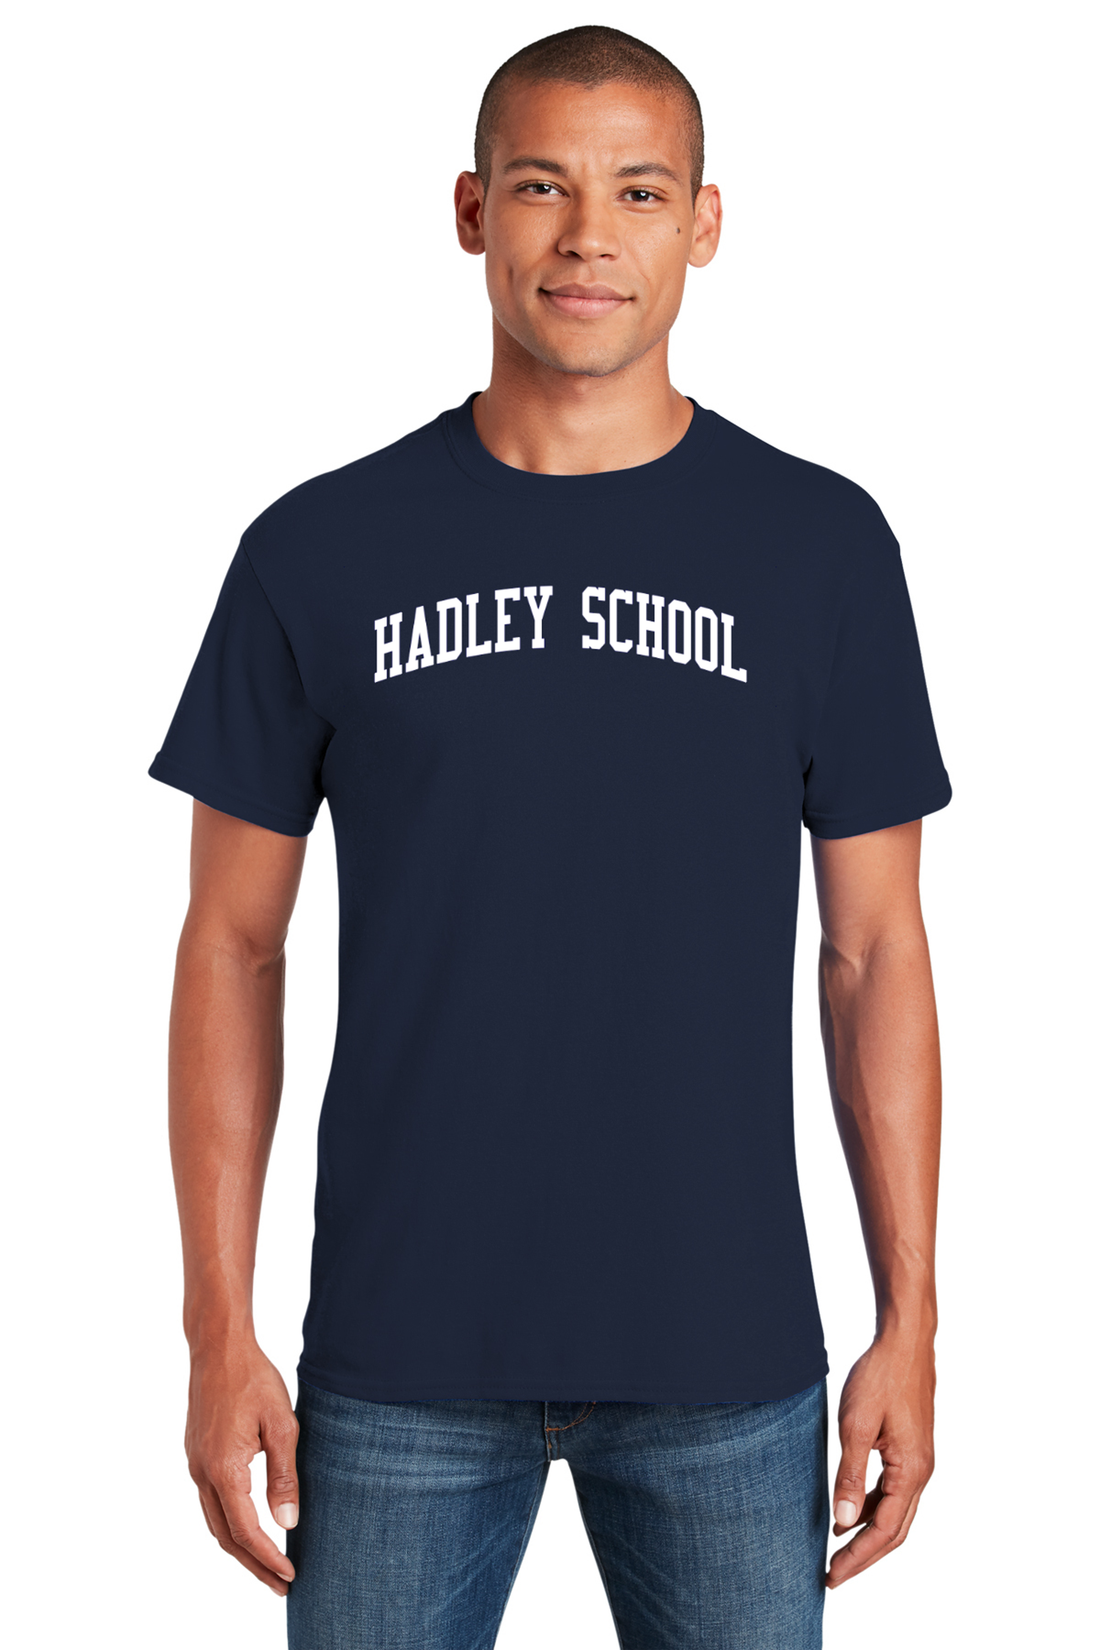 Hadley School Heavy Cotton Tee Shirt